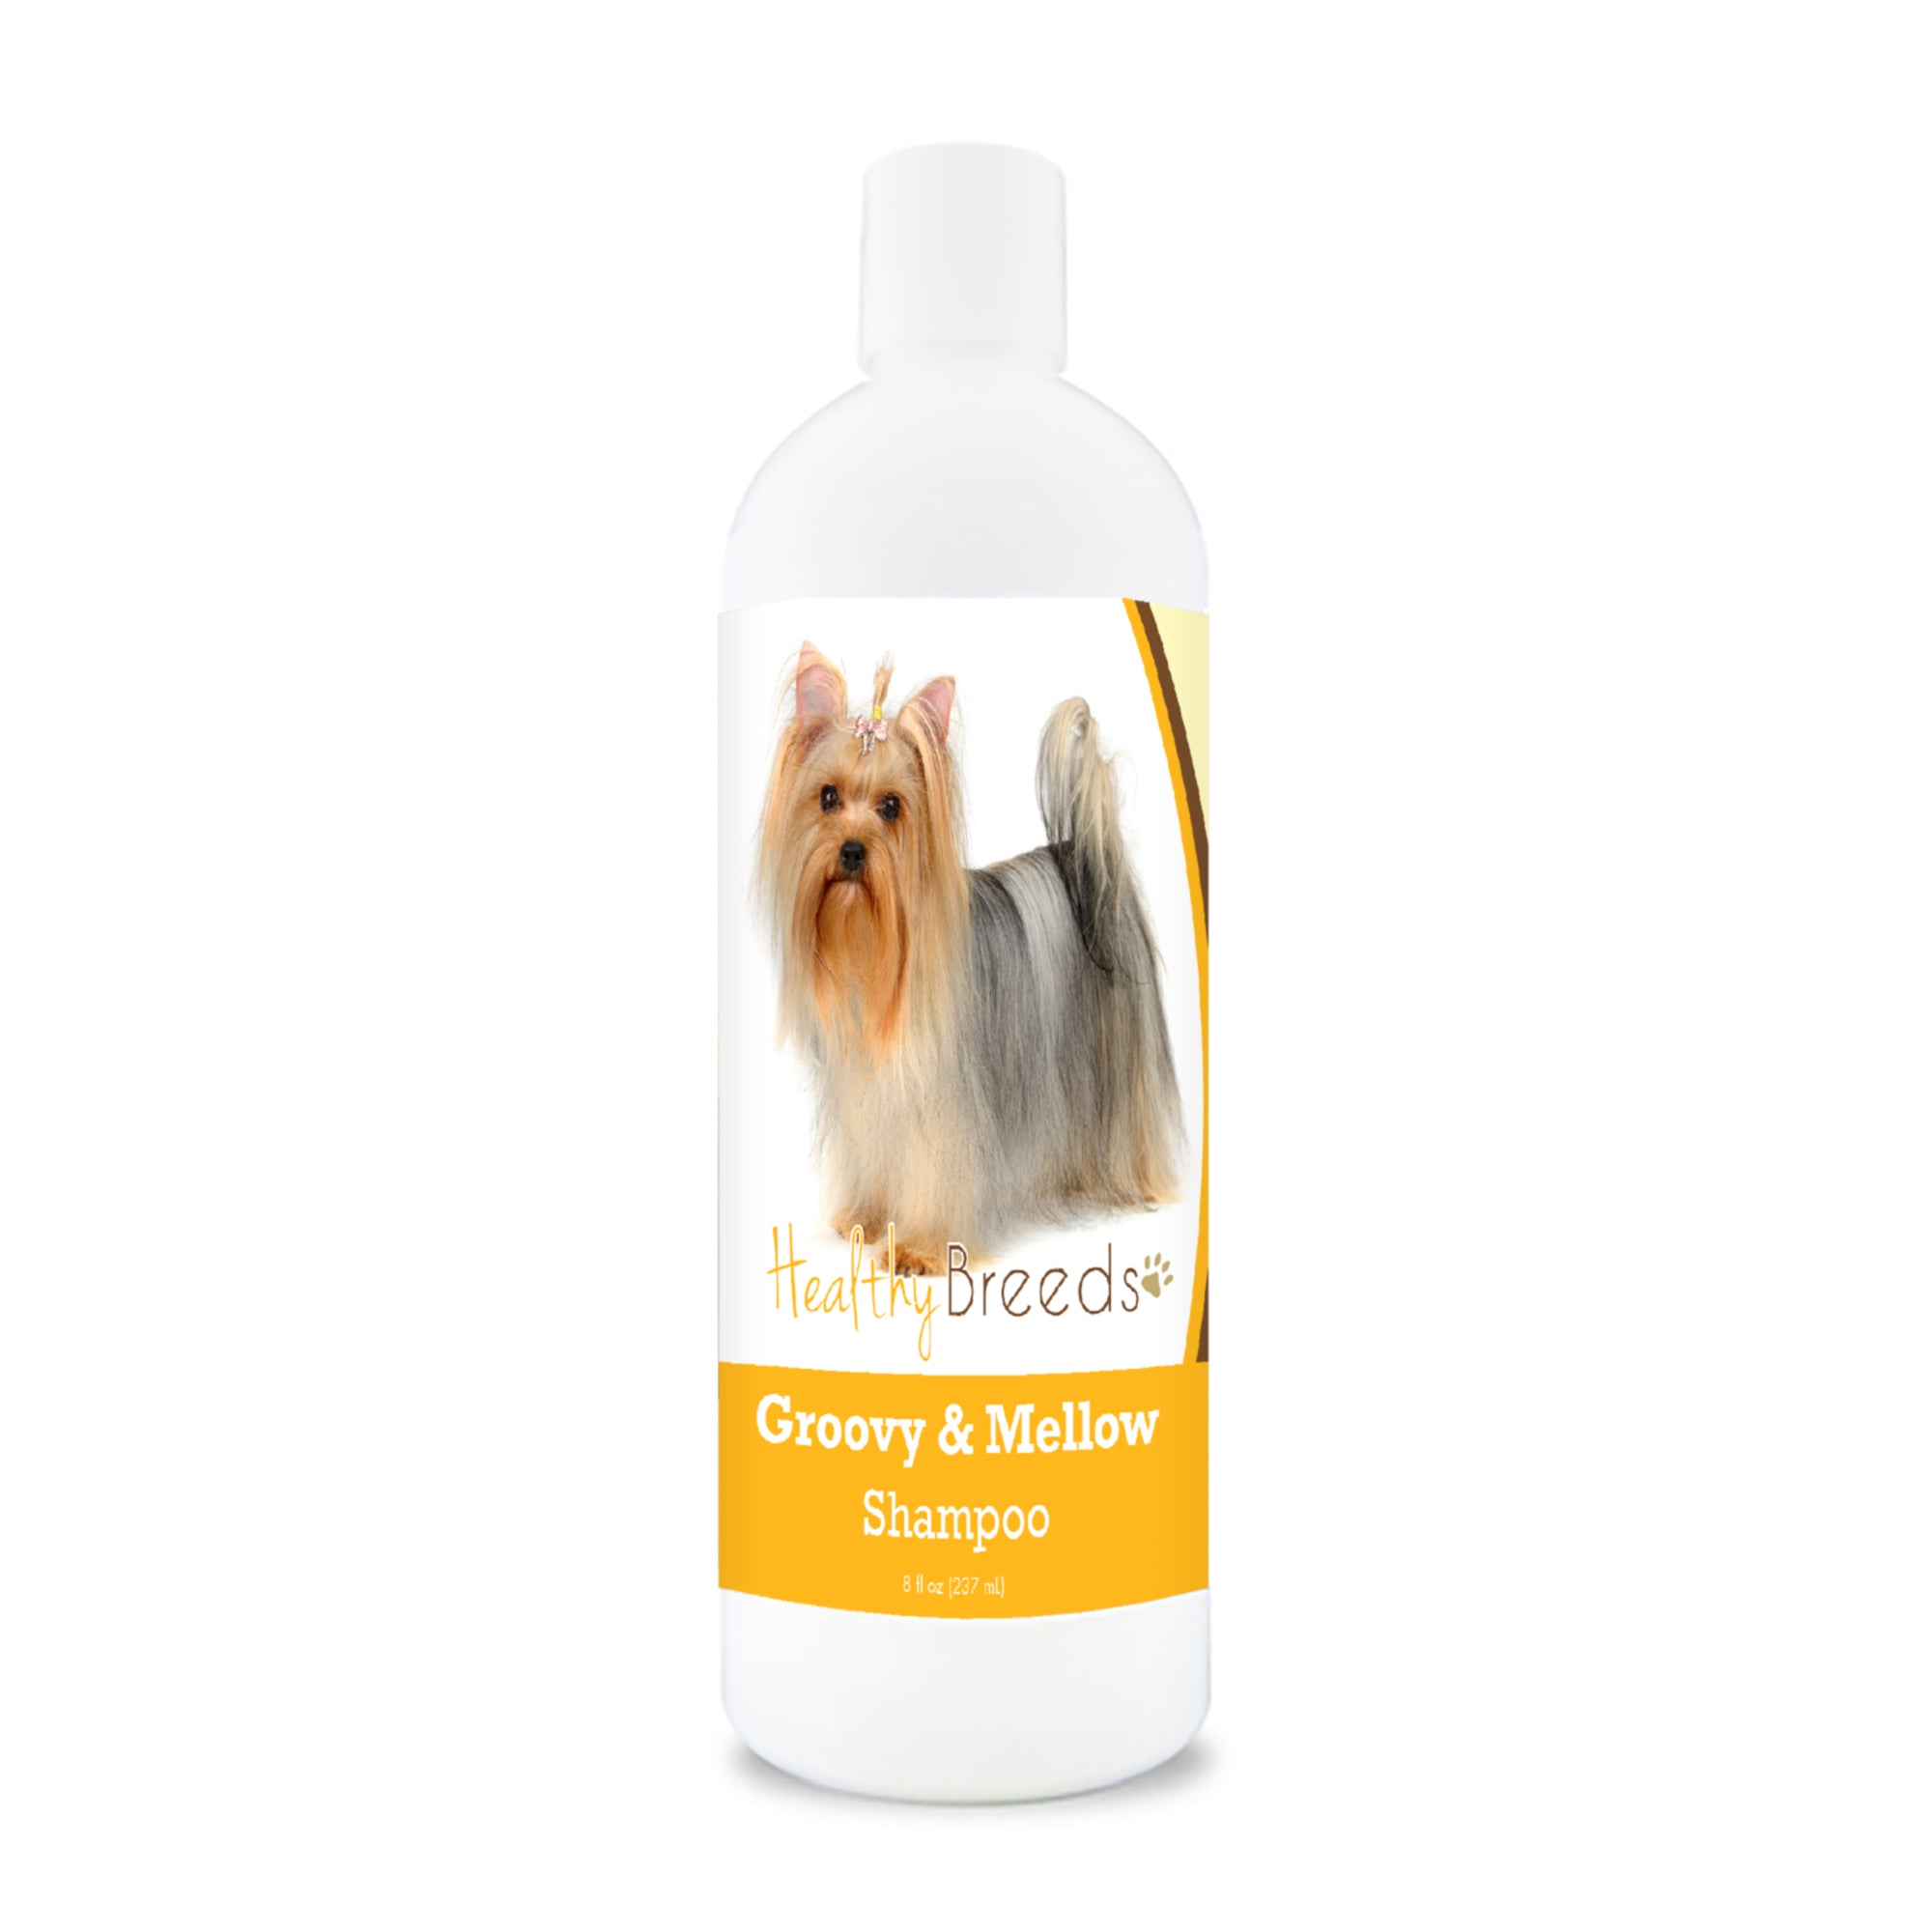 Yorkshire Terrier Groovy & Mellow Shampoo 8 oz